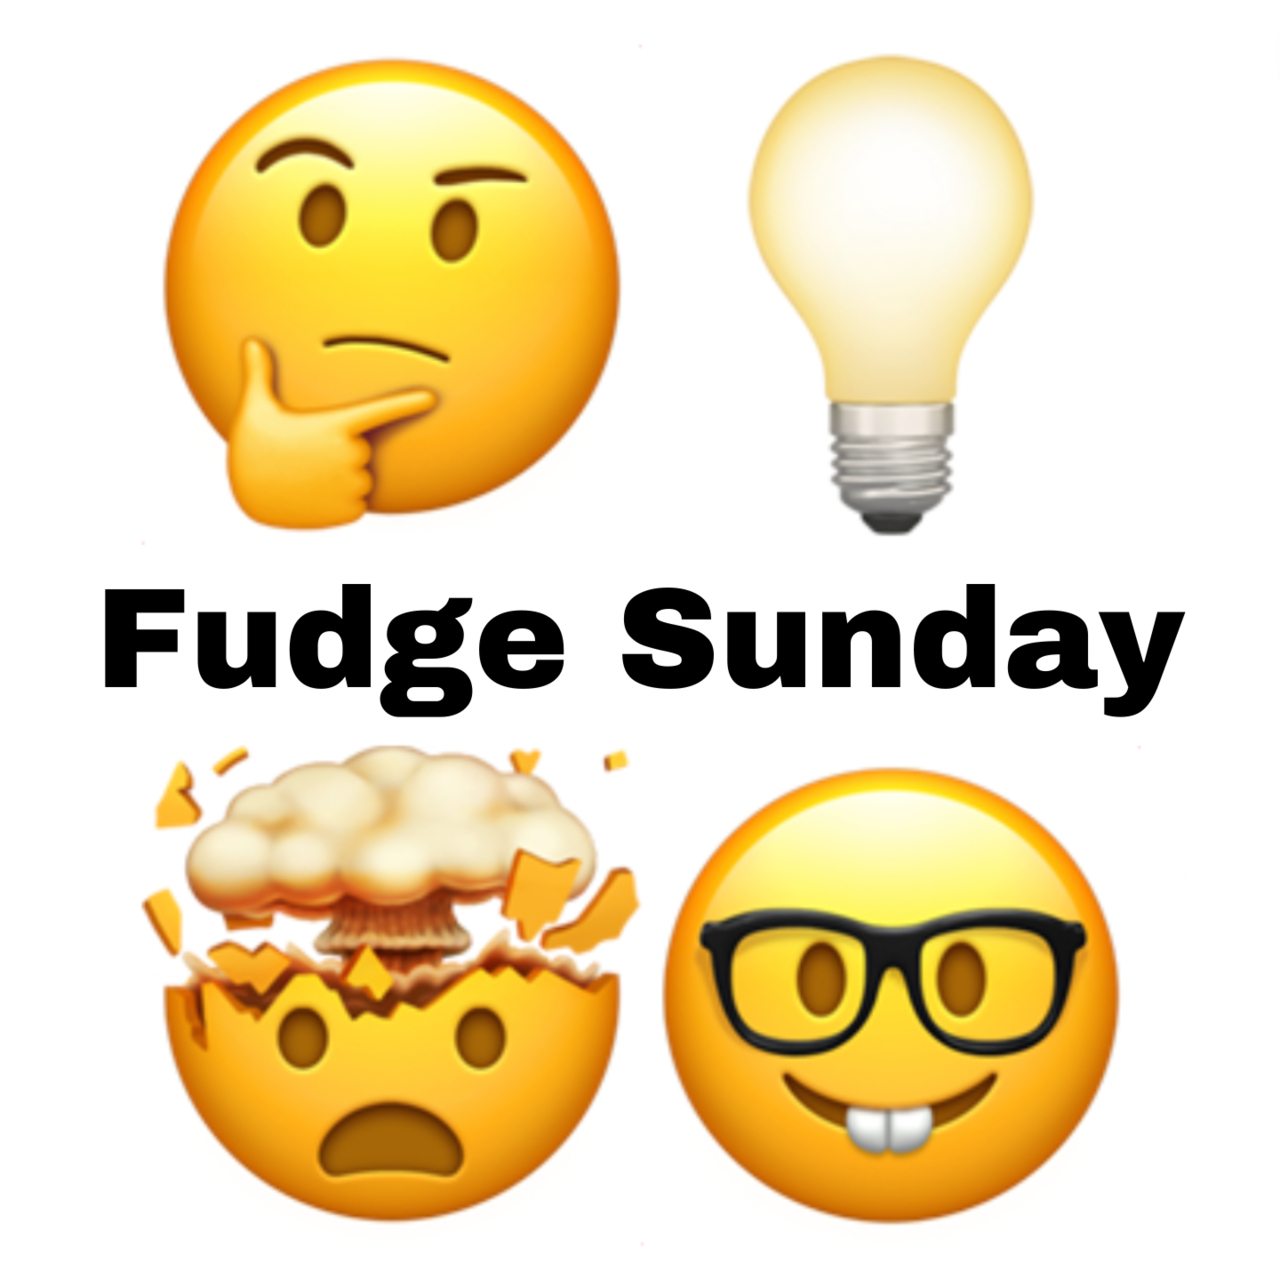 Fudge Sunday has moved to fudge.org